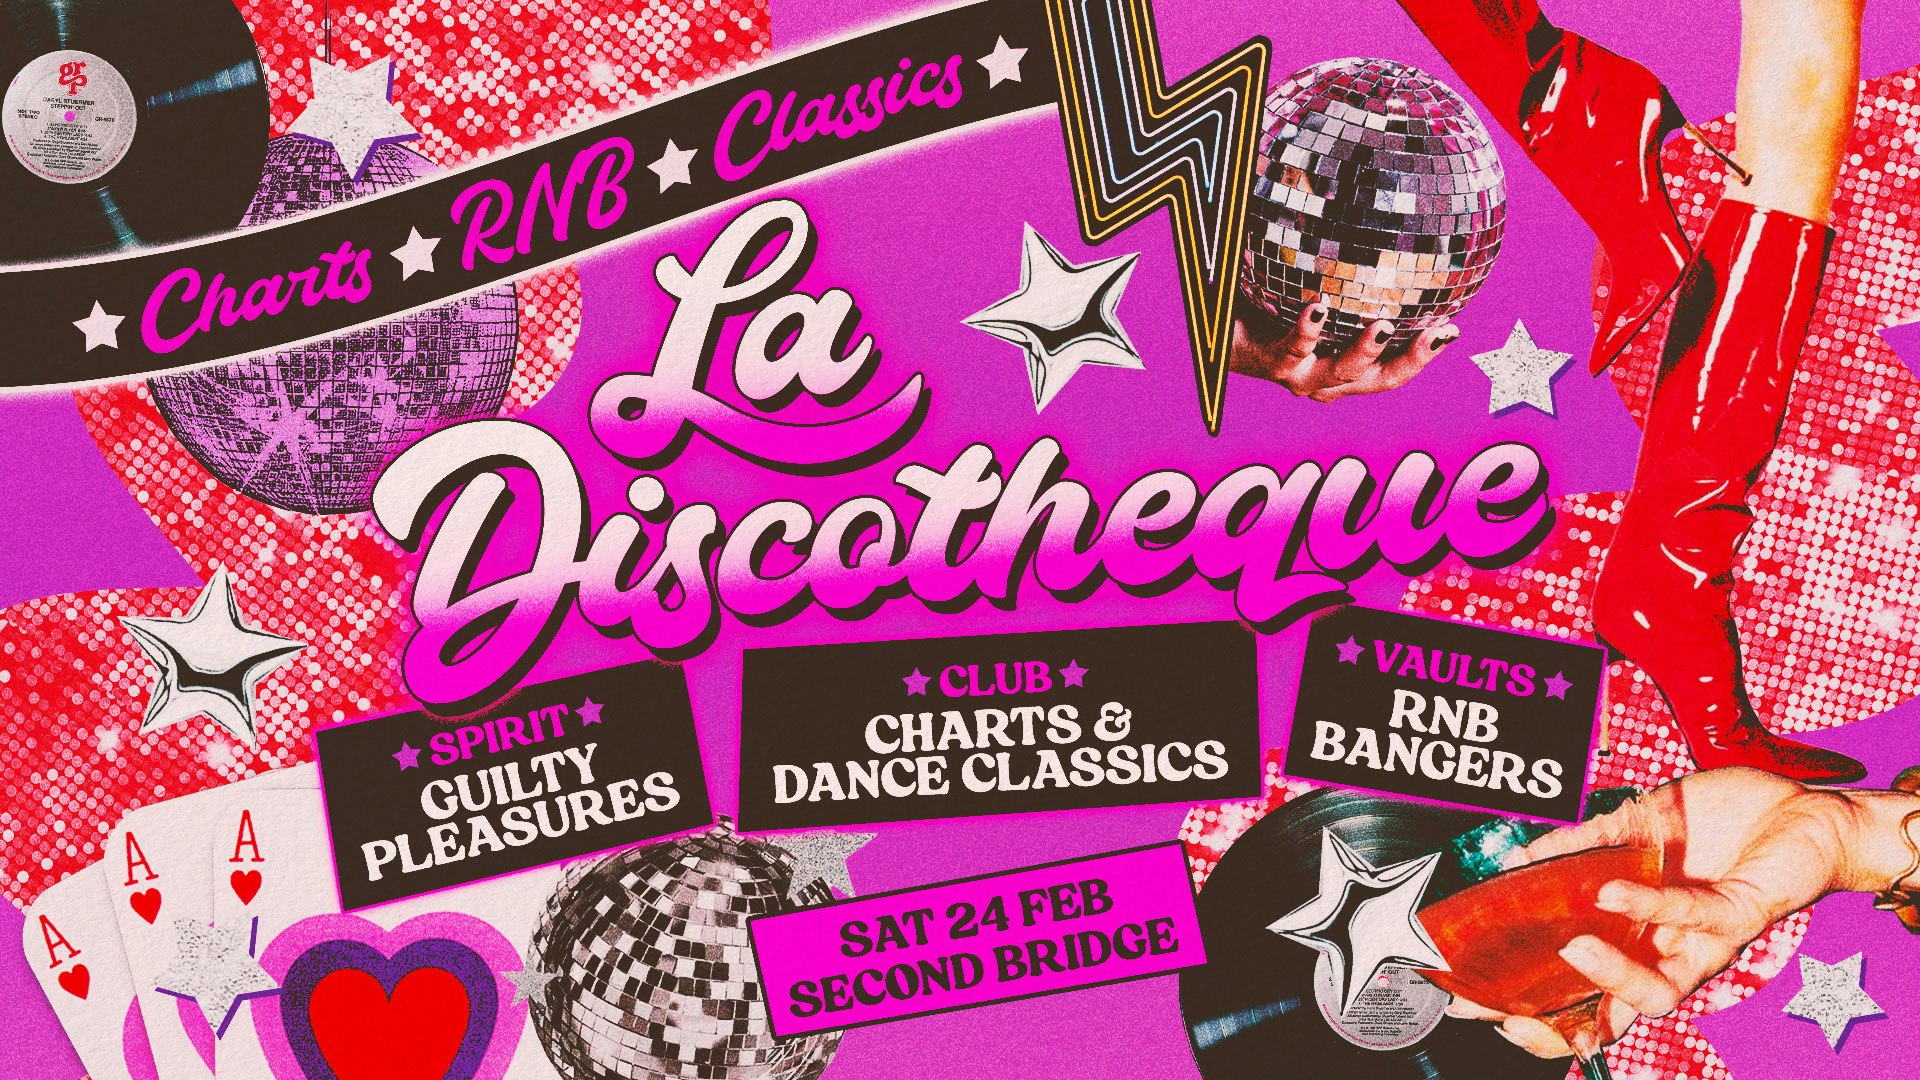 La Discotheque: Paddies Day Special! Guilty Pleasures & Dancefloor Classics [£1 Tickets]